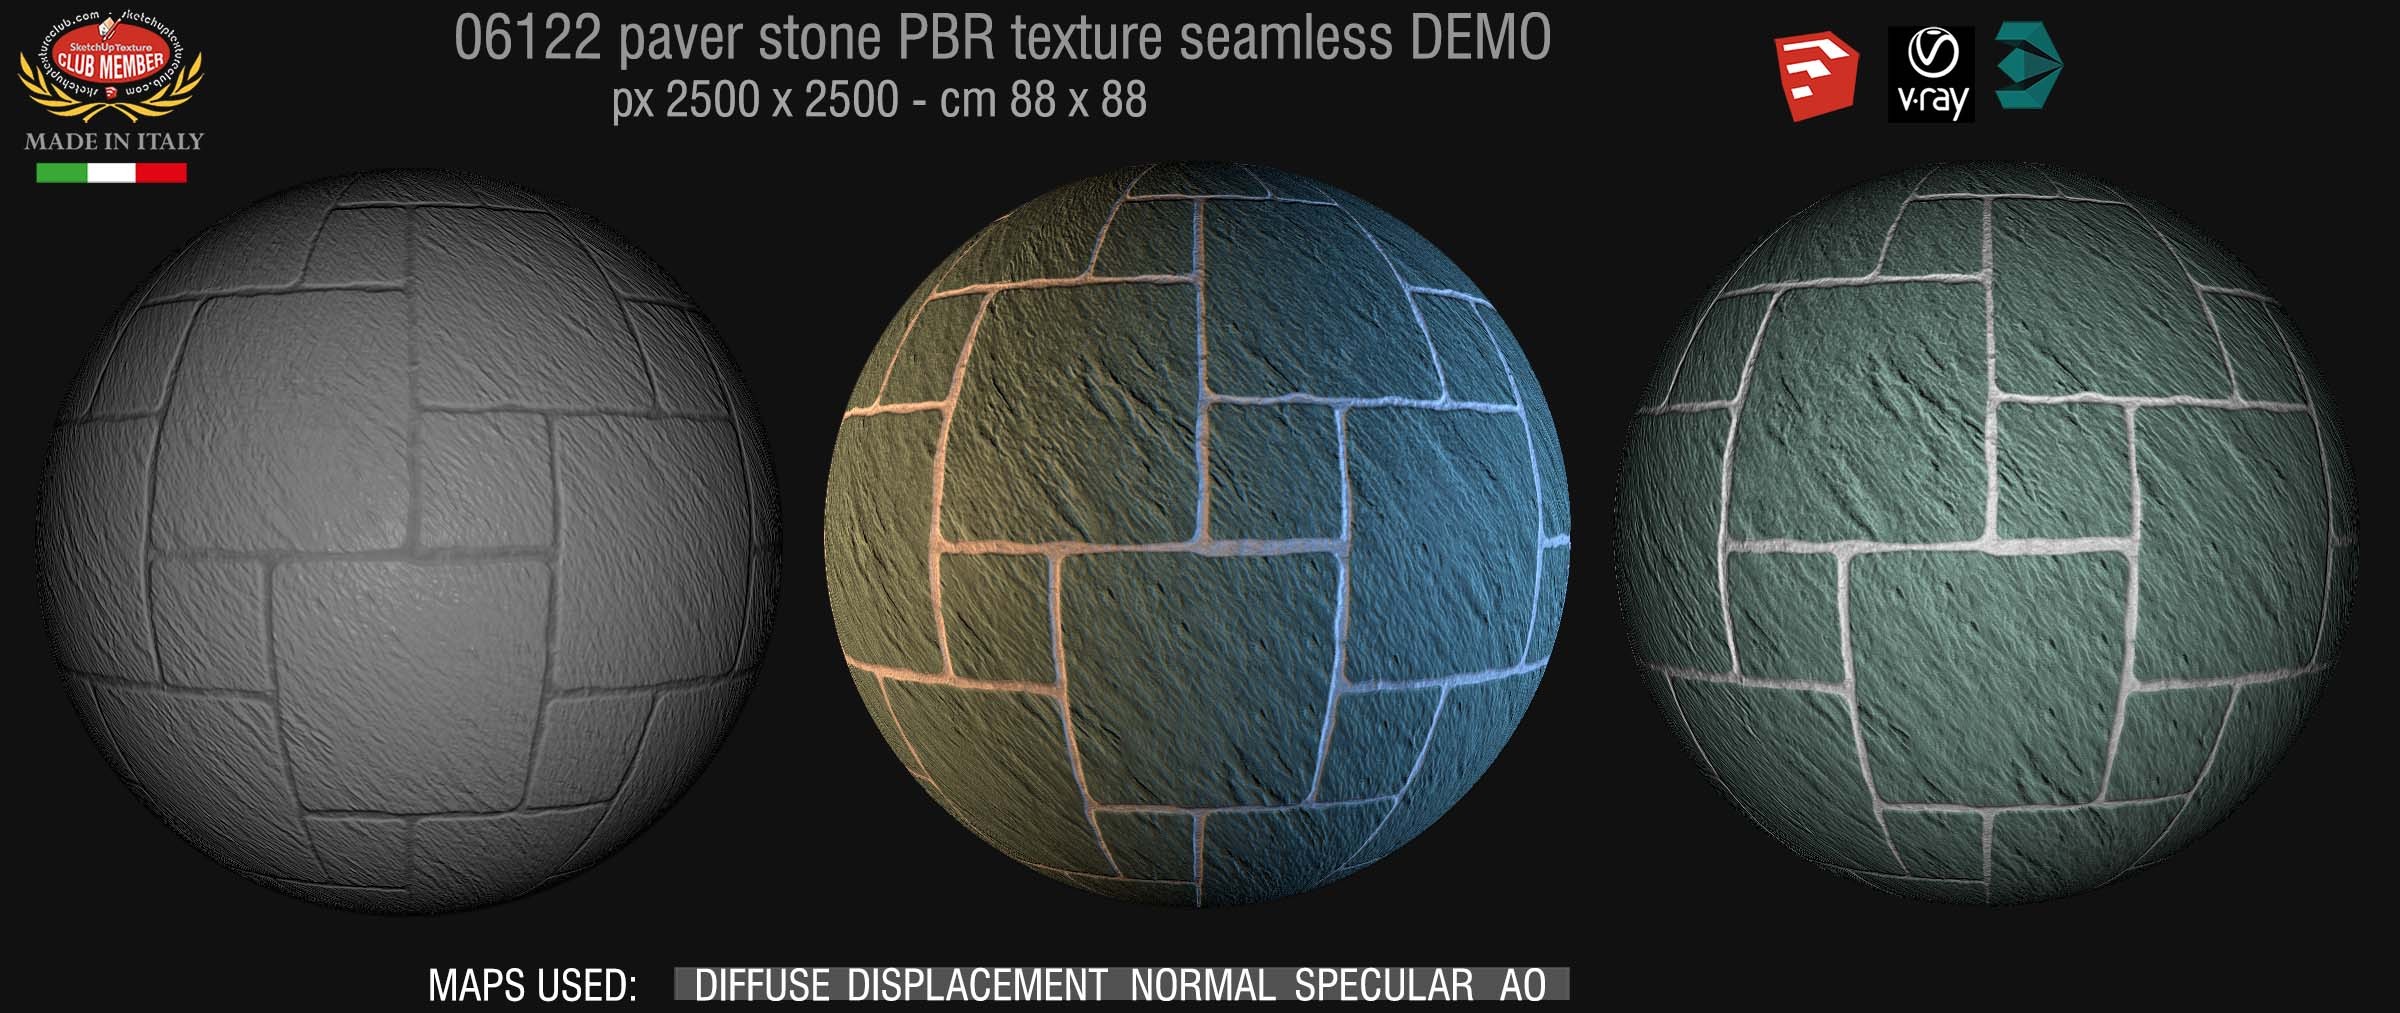 06122 paver stone PBR texture seamless DEMO